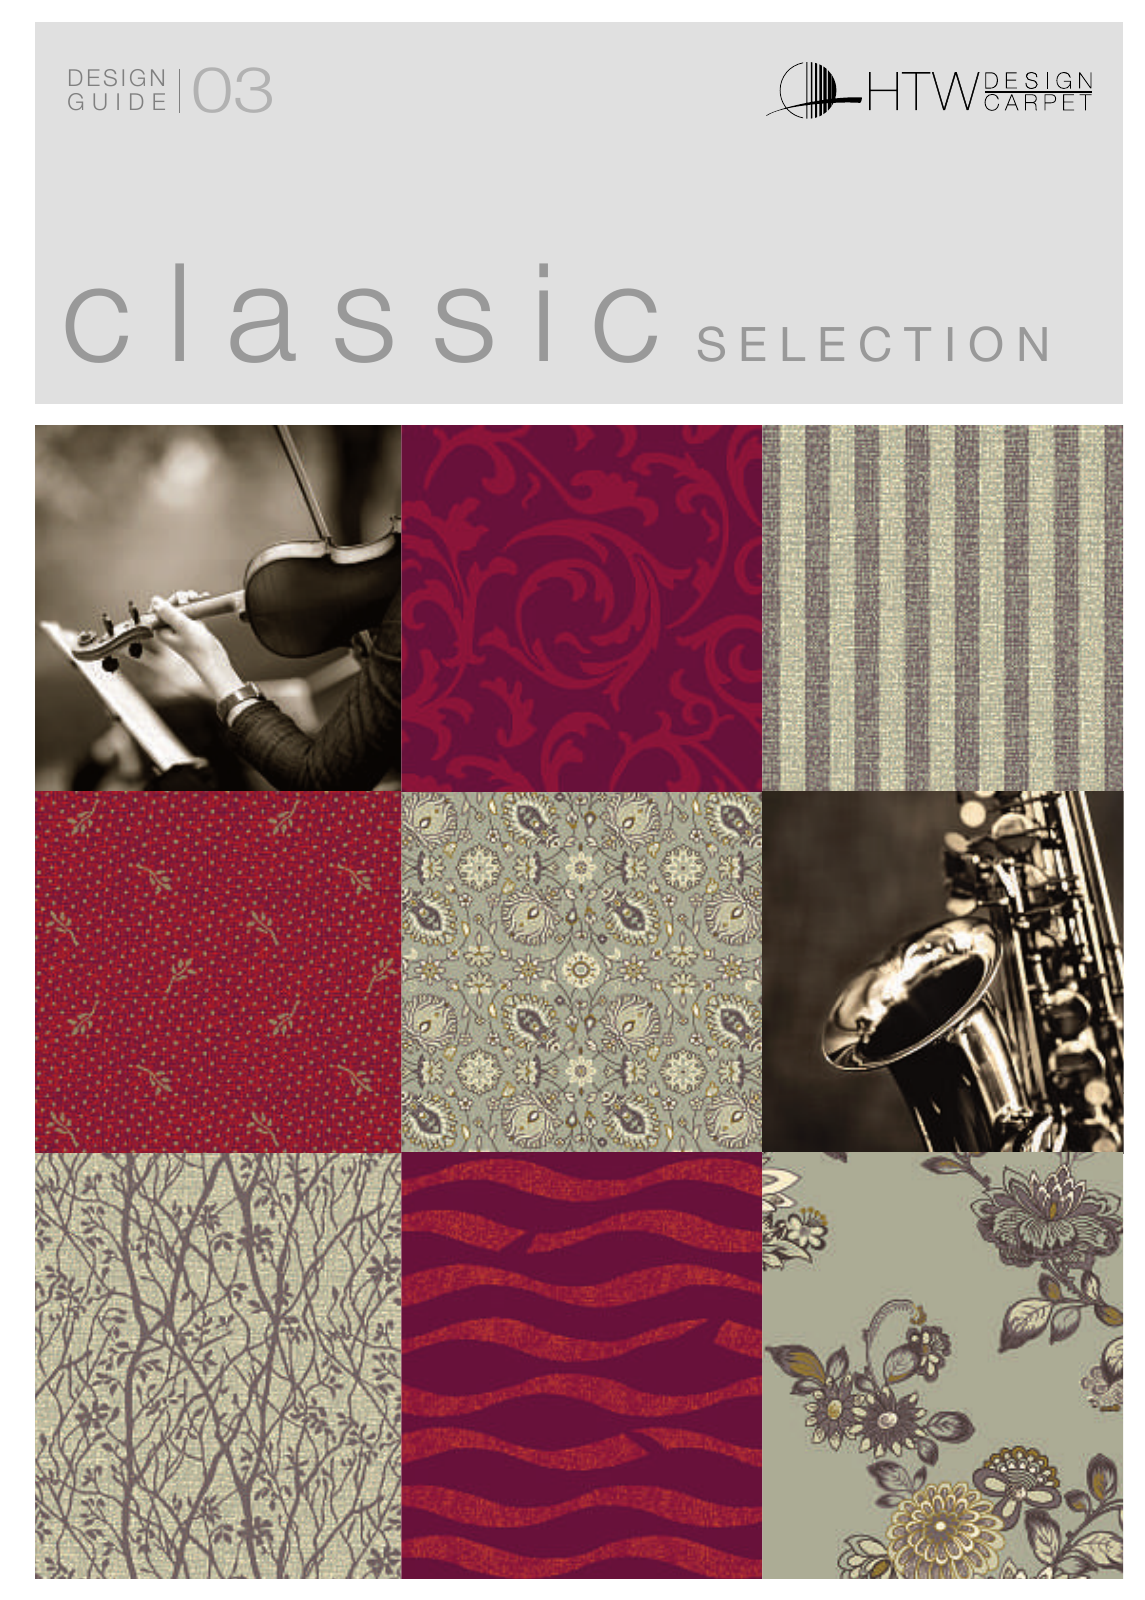 Vorschau DesignGuide03 - Classic Selection Seite 1